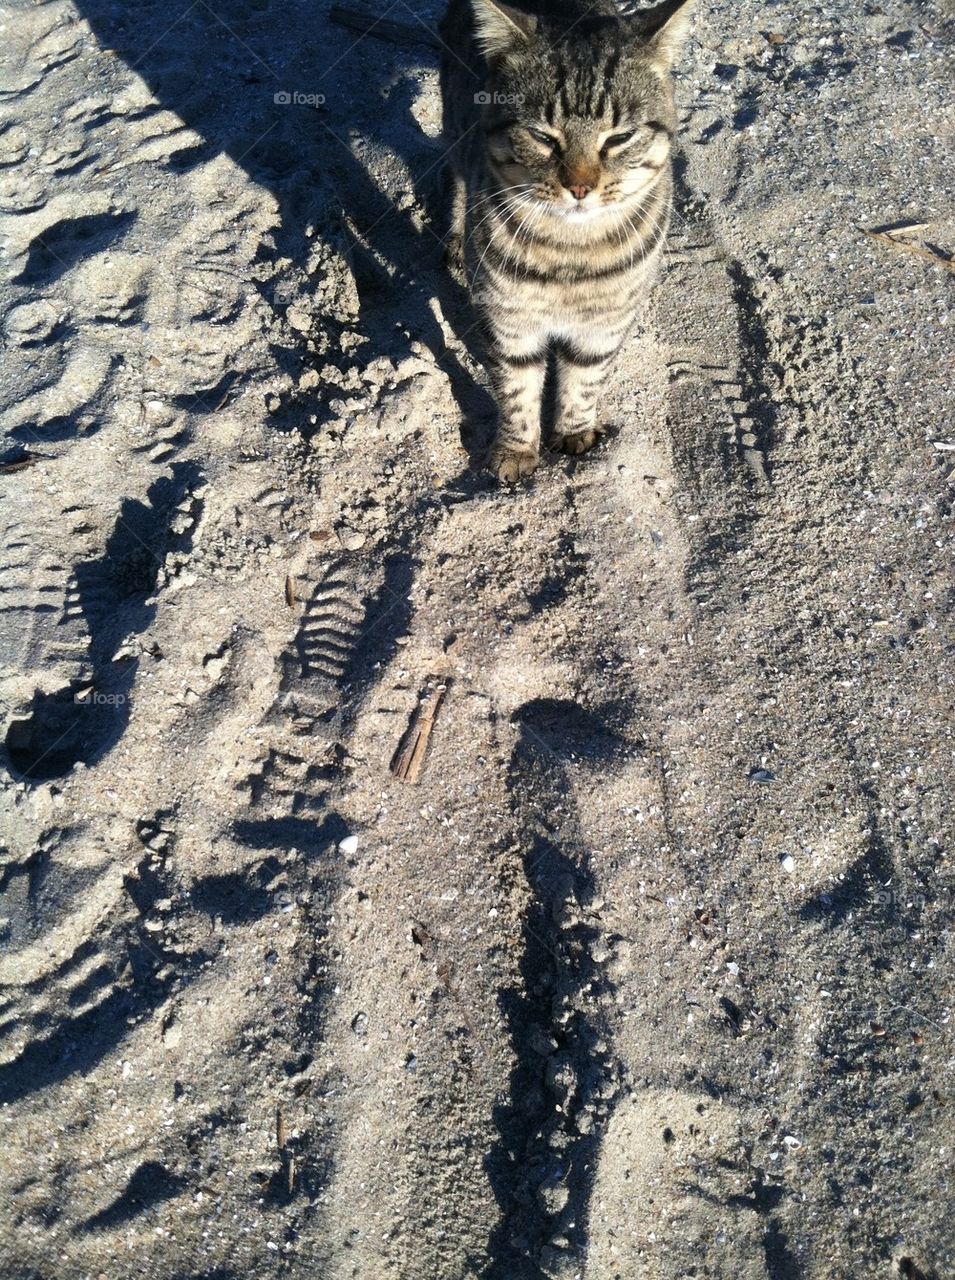 Beach cat